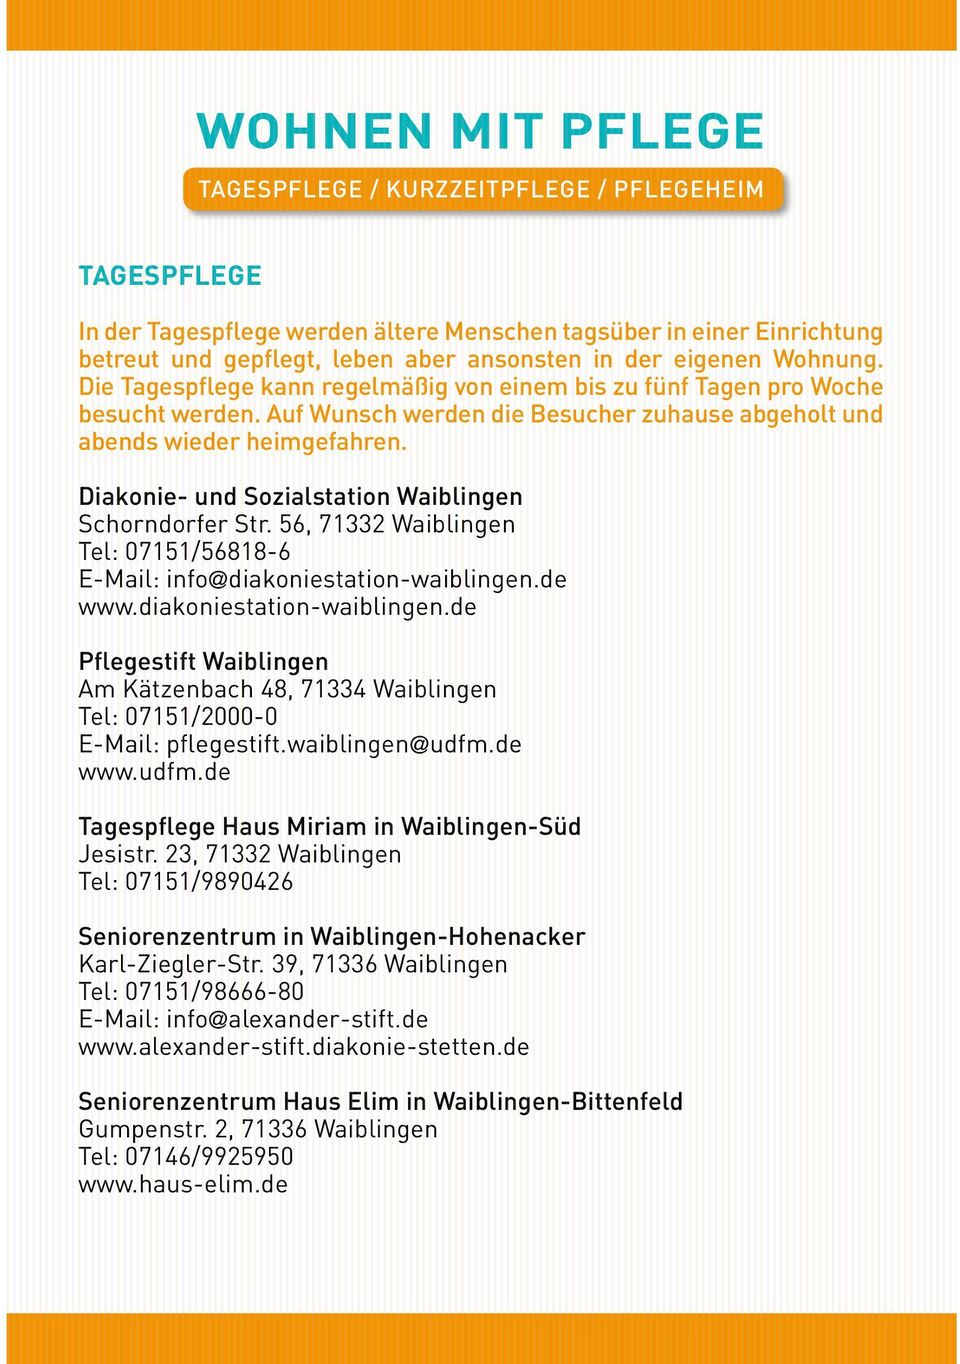 Diakonie- und Sozialstation Waiblingen Schorndorfer Str. 56, 71332 Waiblingen Tel: 07151/56818-6 E-Mail: info@diakoniestation-waiblingen.